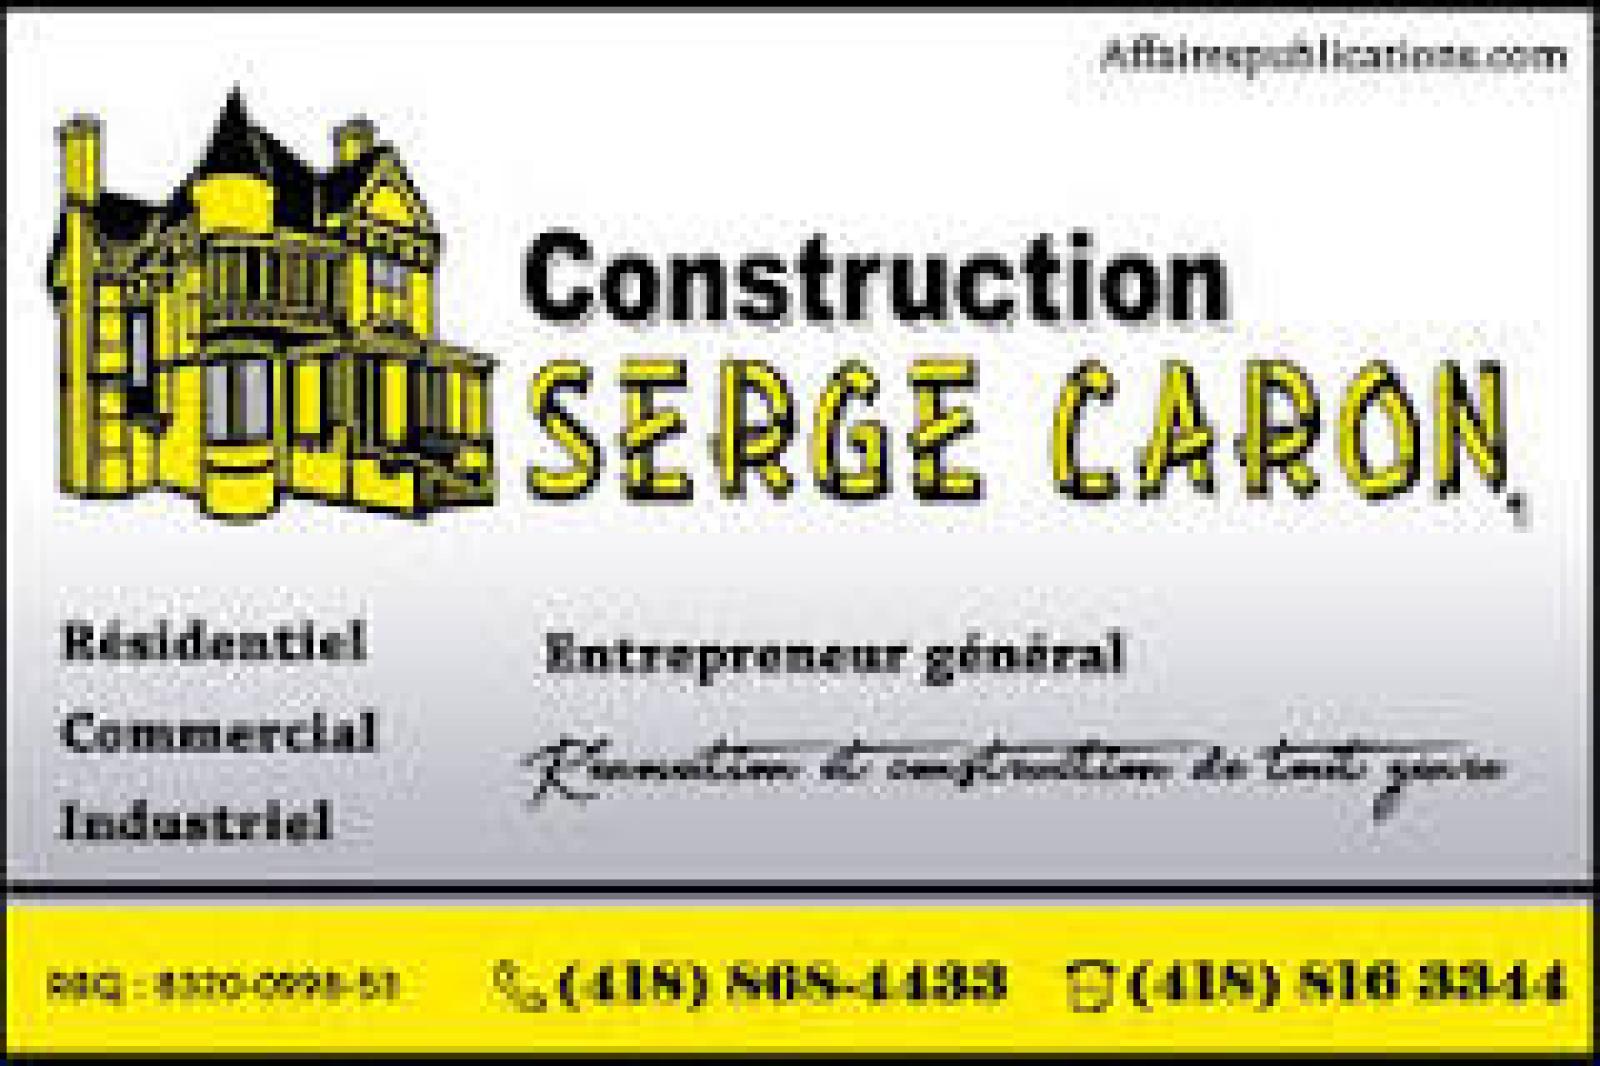 Construction Serge Caron. Logo